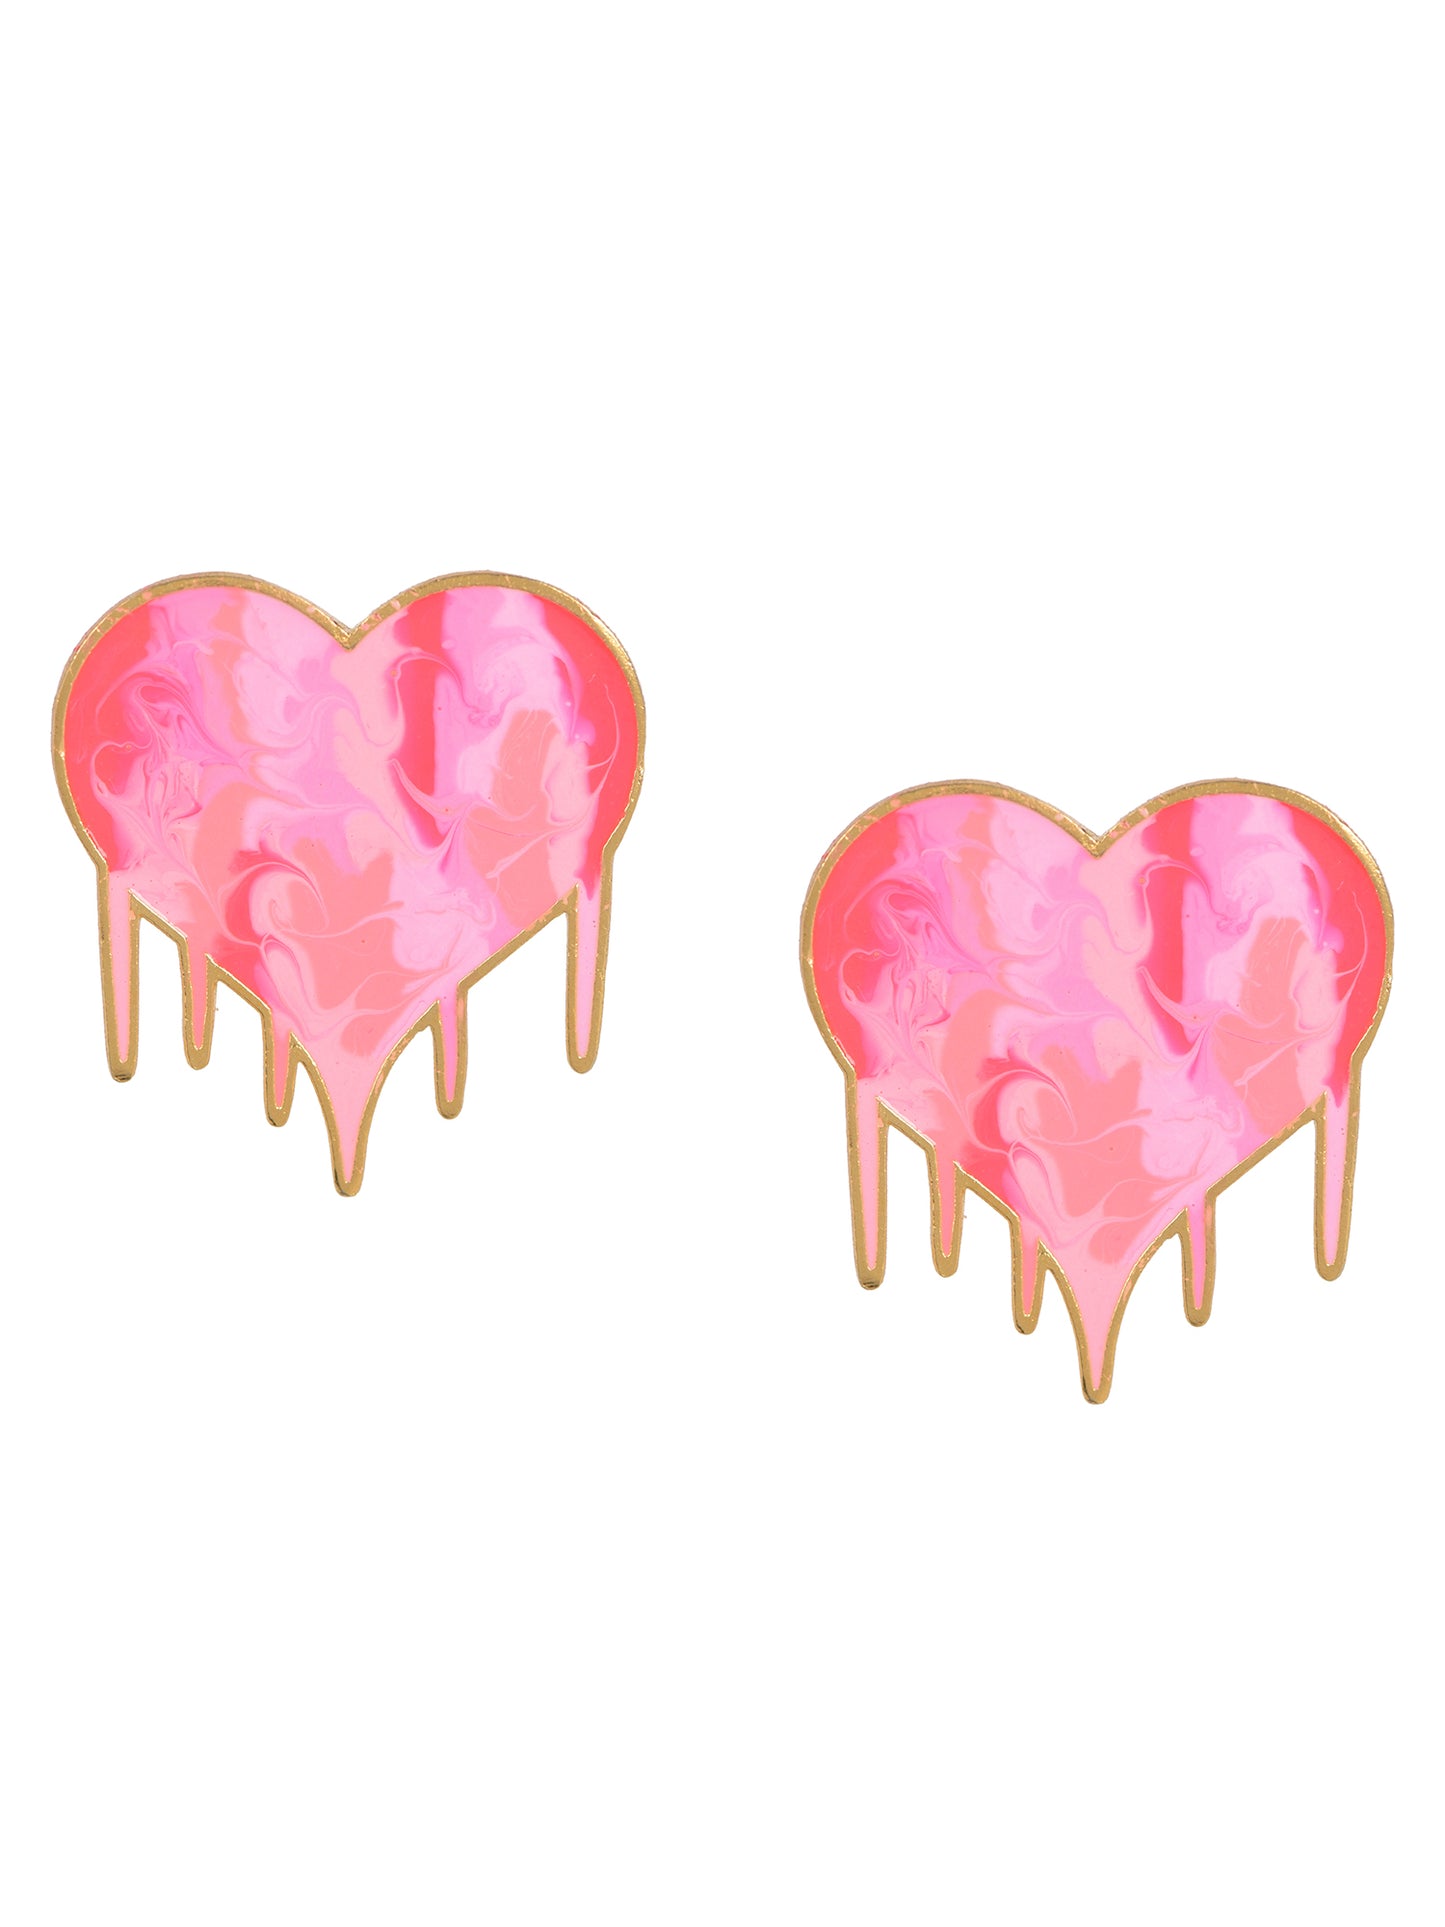 Hearts full of love earrings- pink